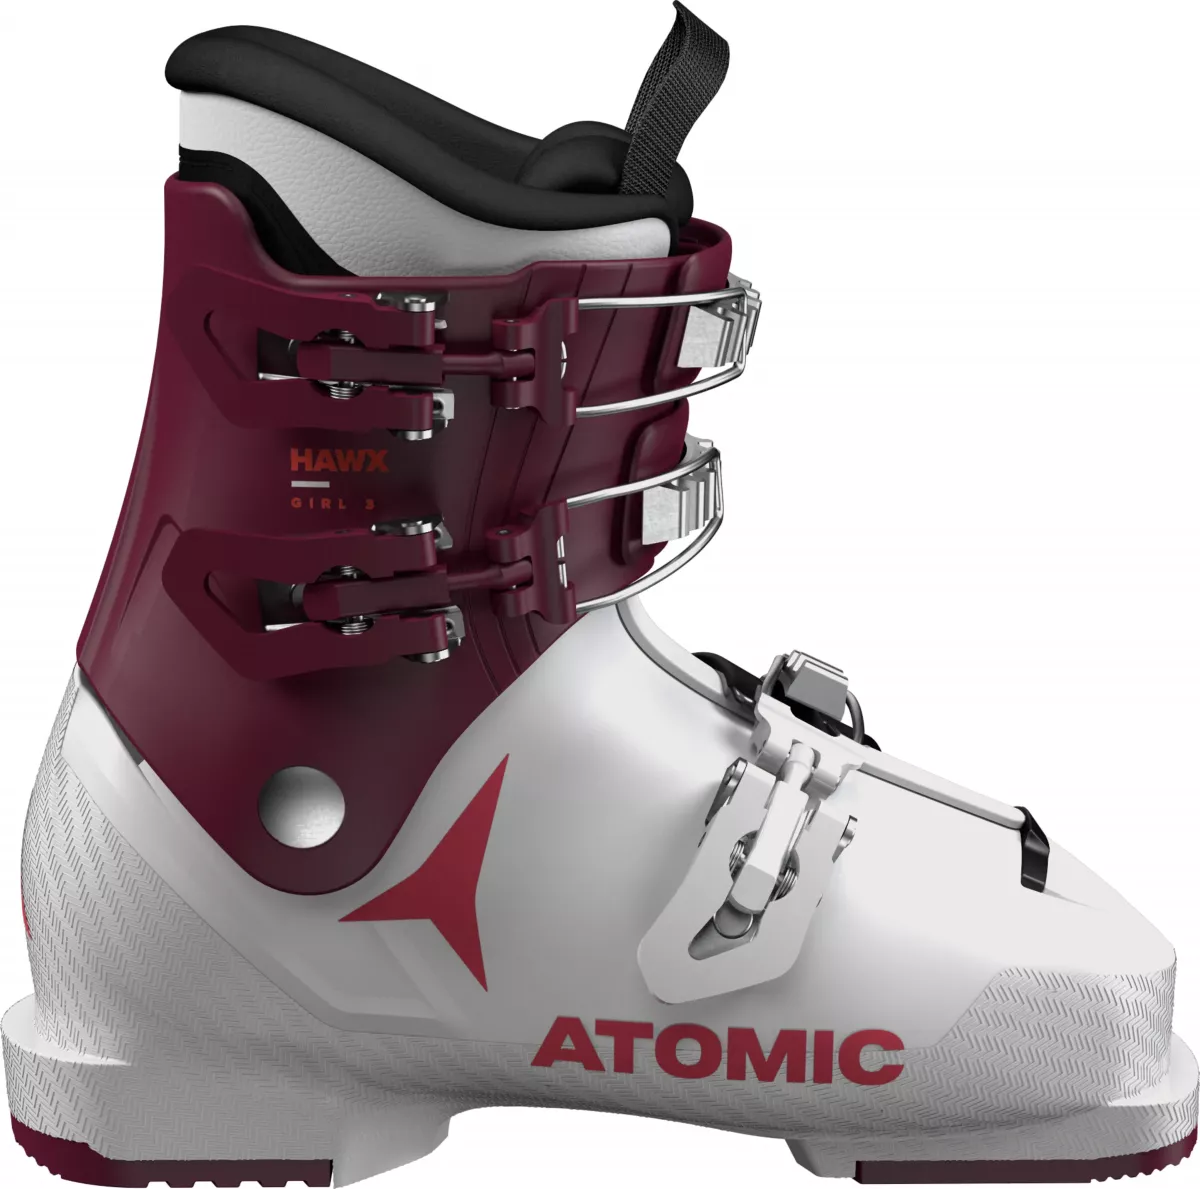 Atomic Hawx Girl 3 sícipő, white-berry 2022/2023